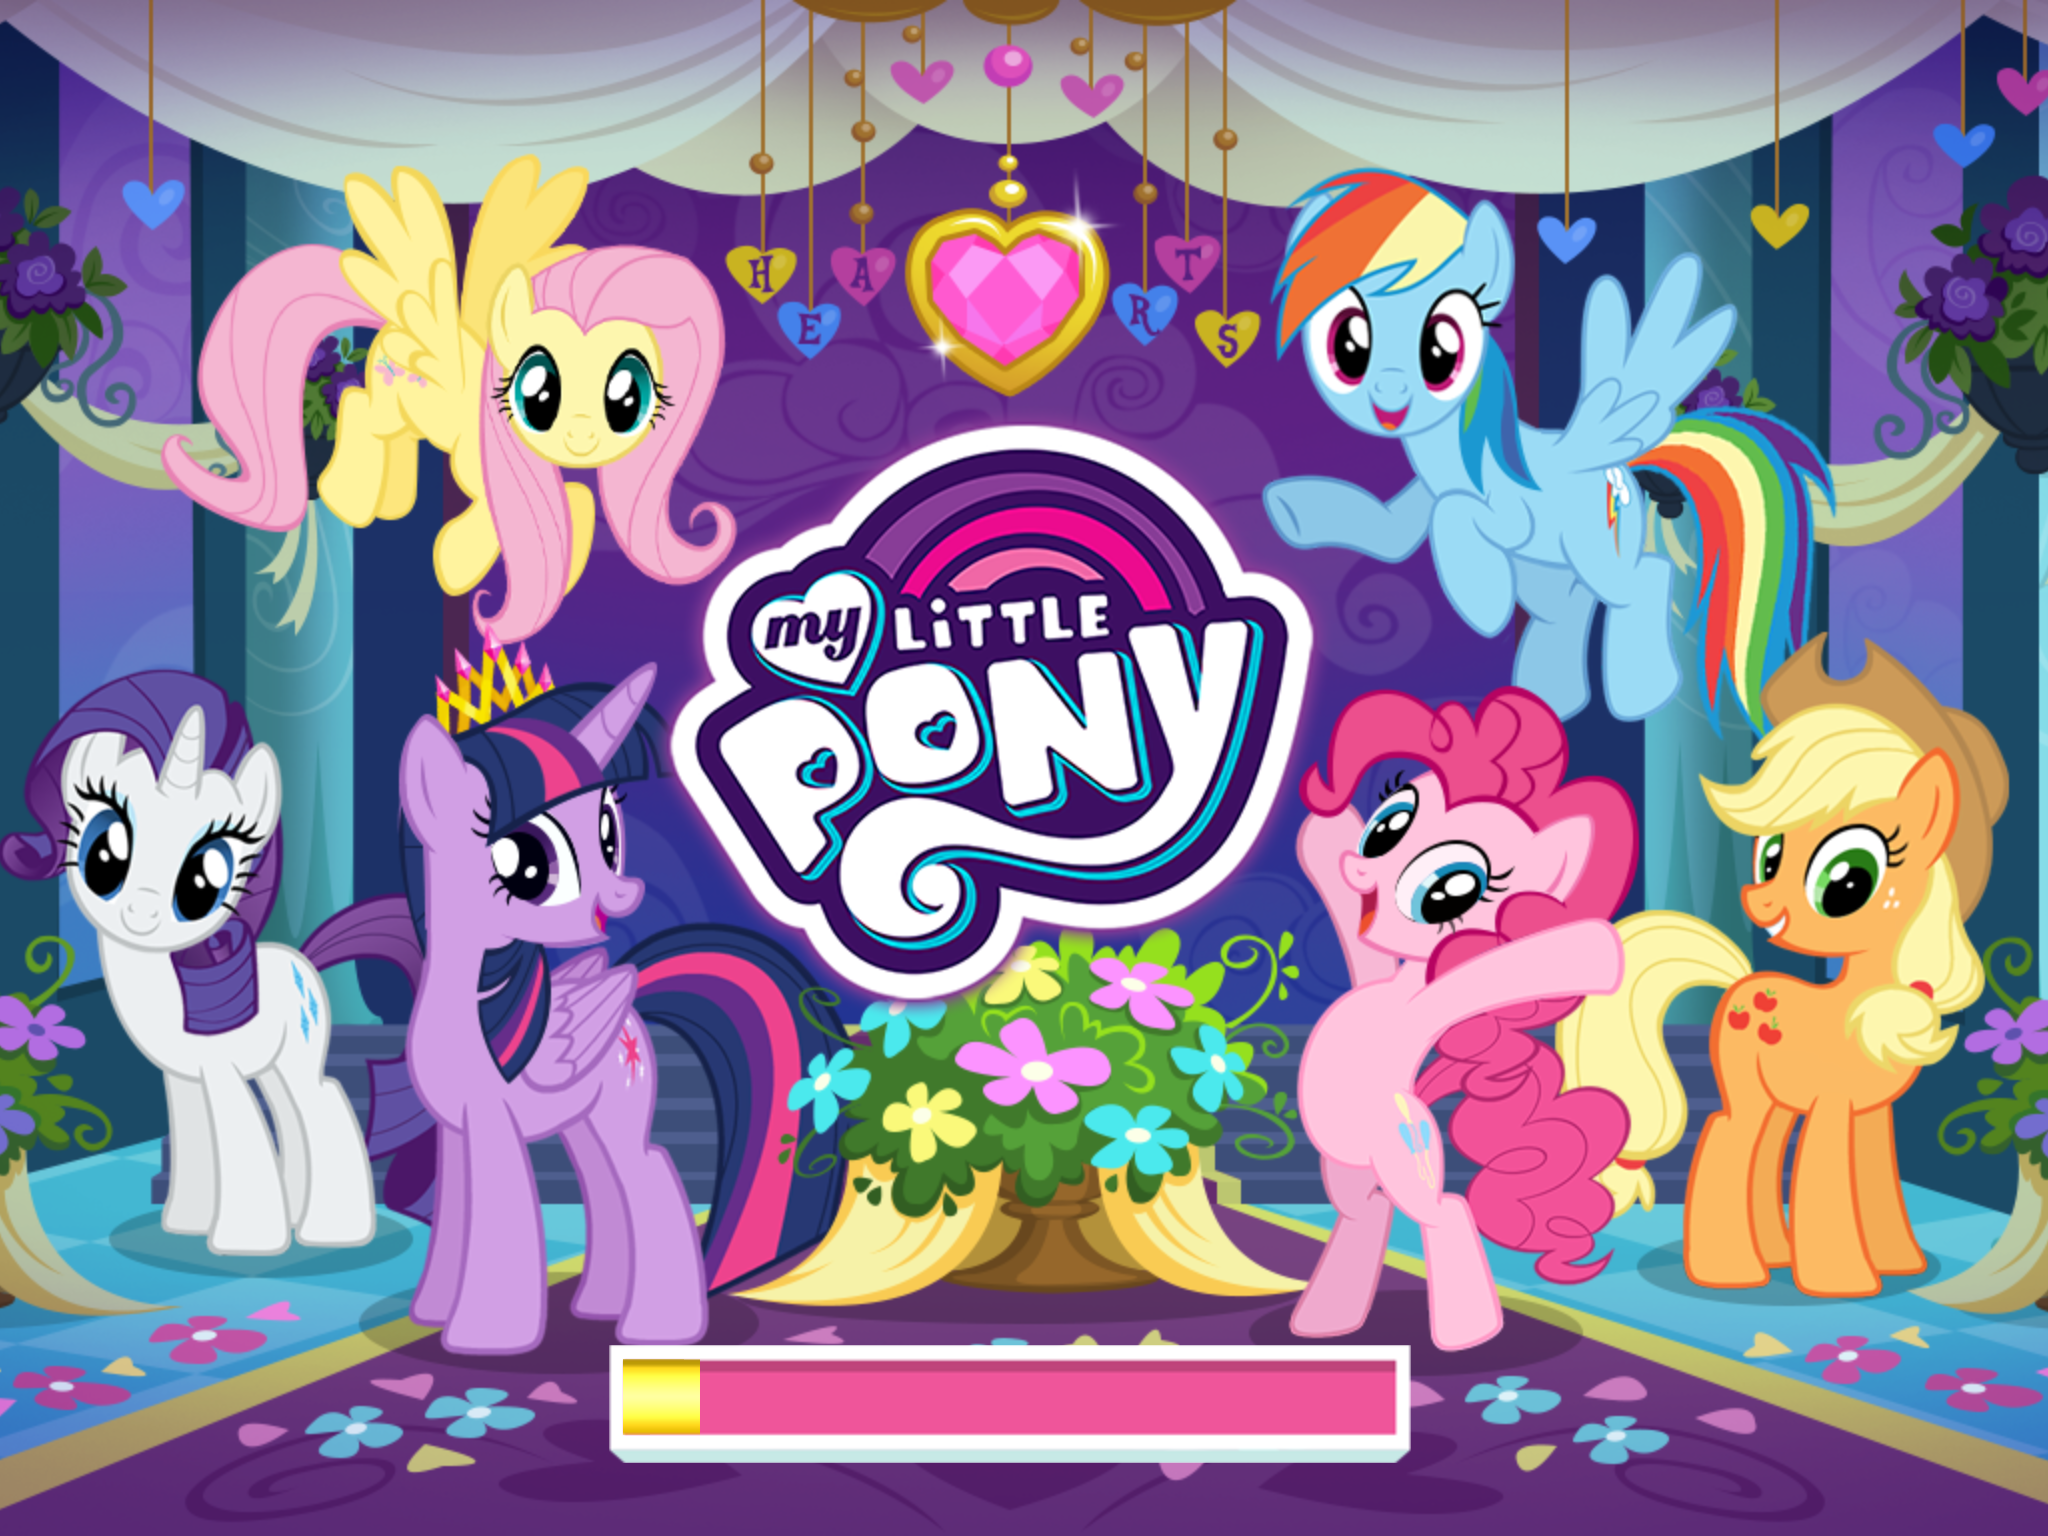 Новые игры литл. My little Pony игра. My little Pony магия принцесс игра. Игра MLP Gameloft. Игры my little Pony Дружба это чудо.